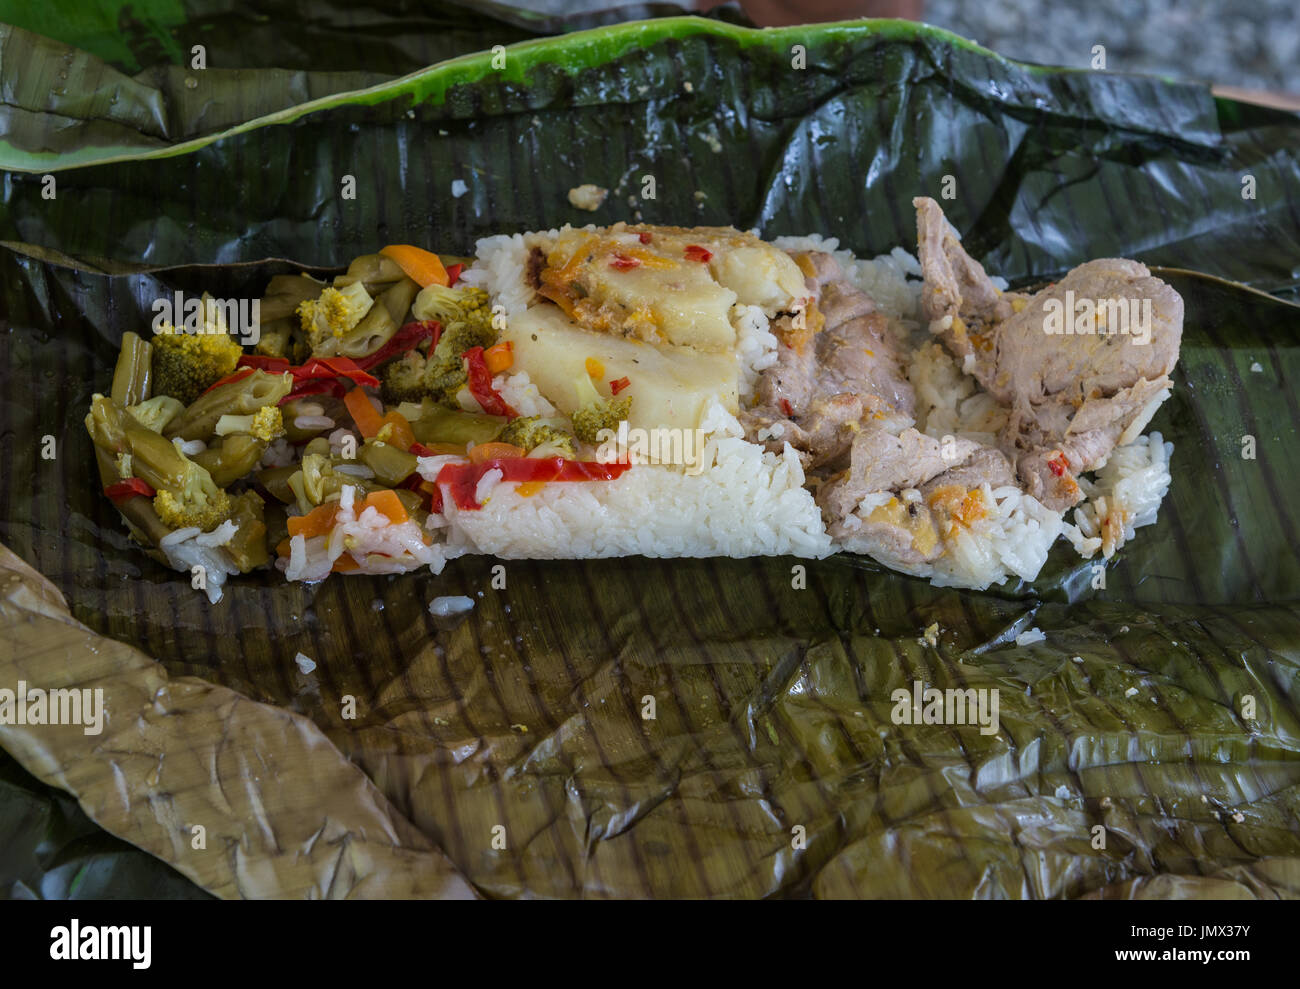 Bananenblatt eingewickelt Reis und Huhn. Kolumbien, Südamerika. Stockfoto